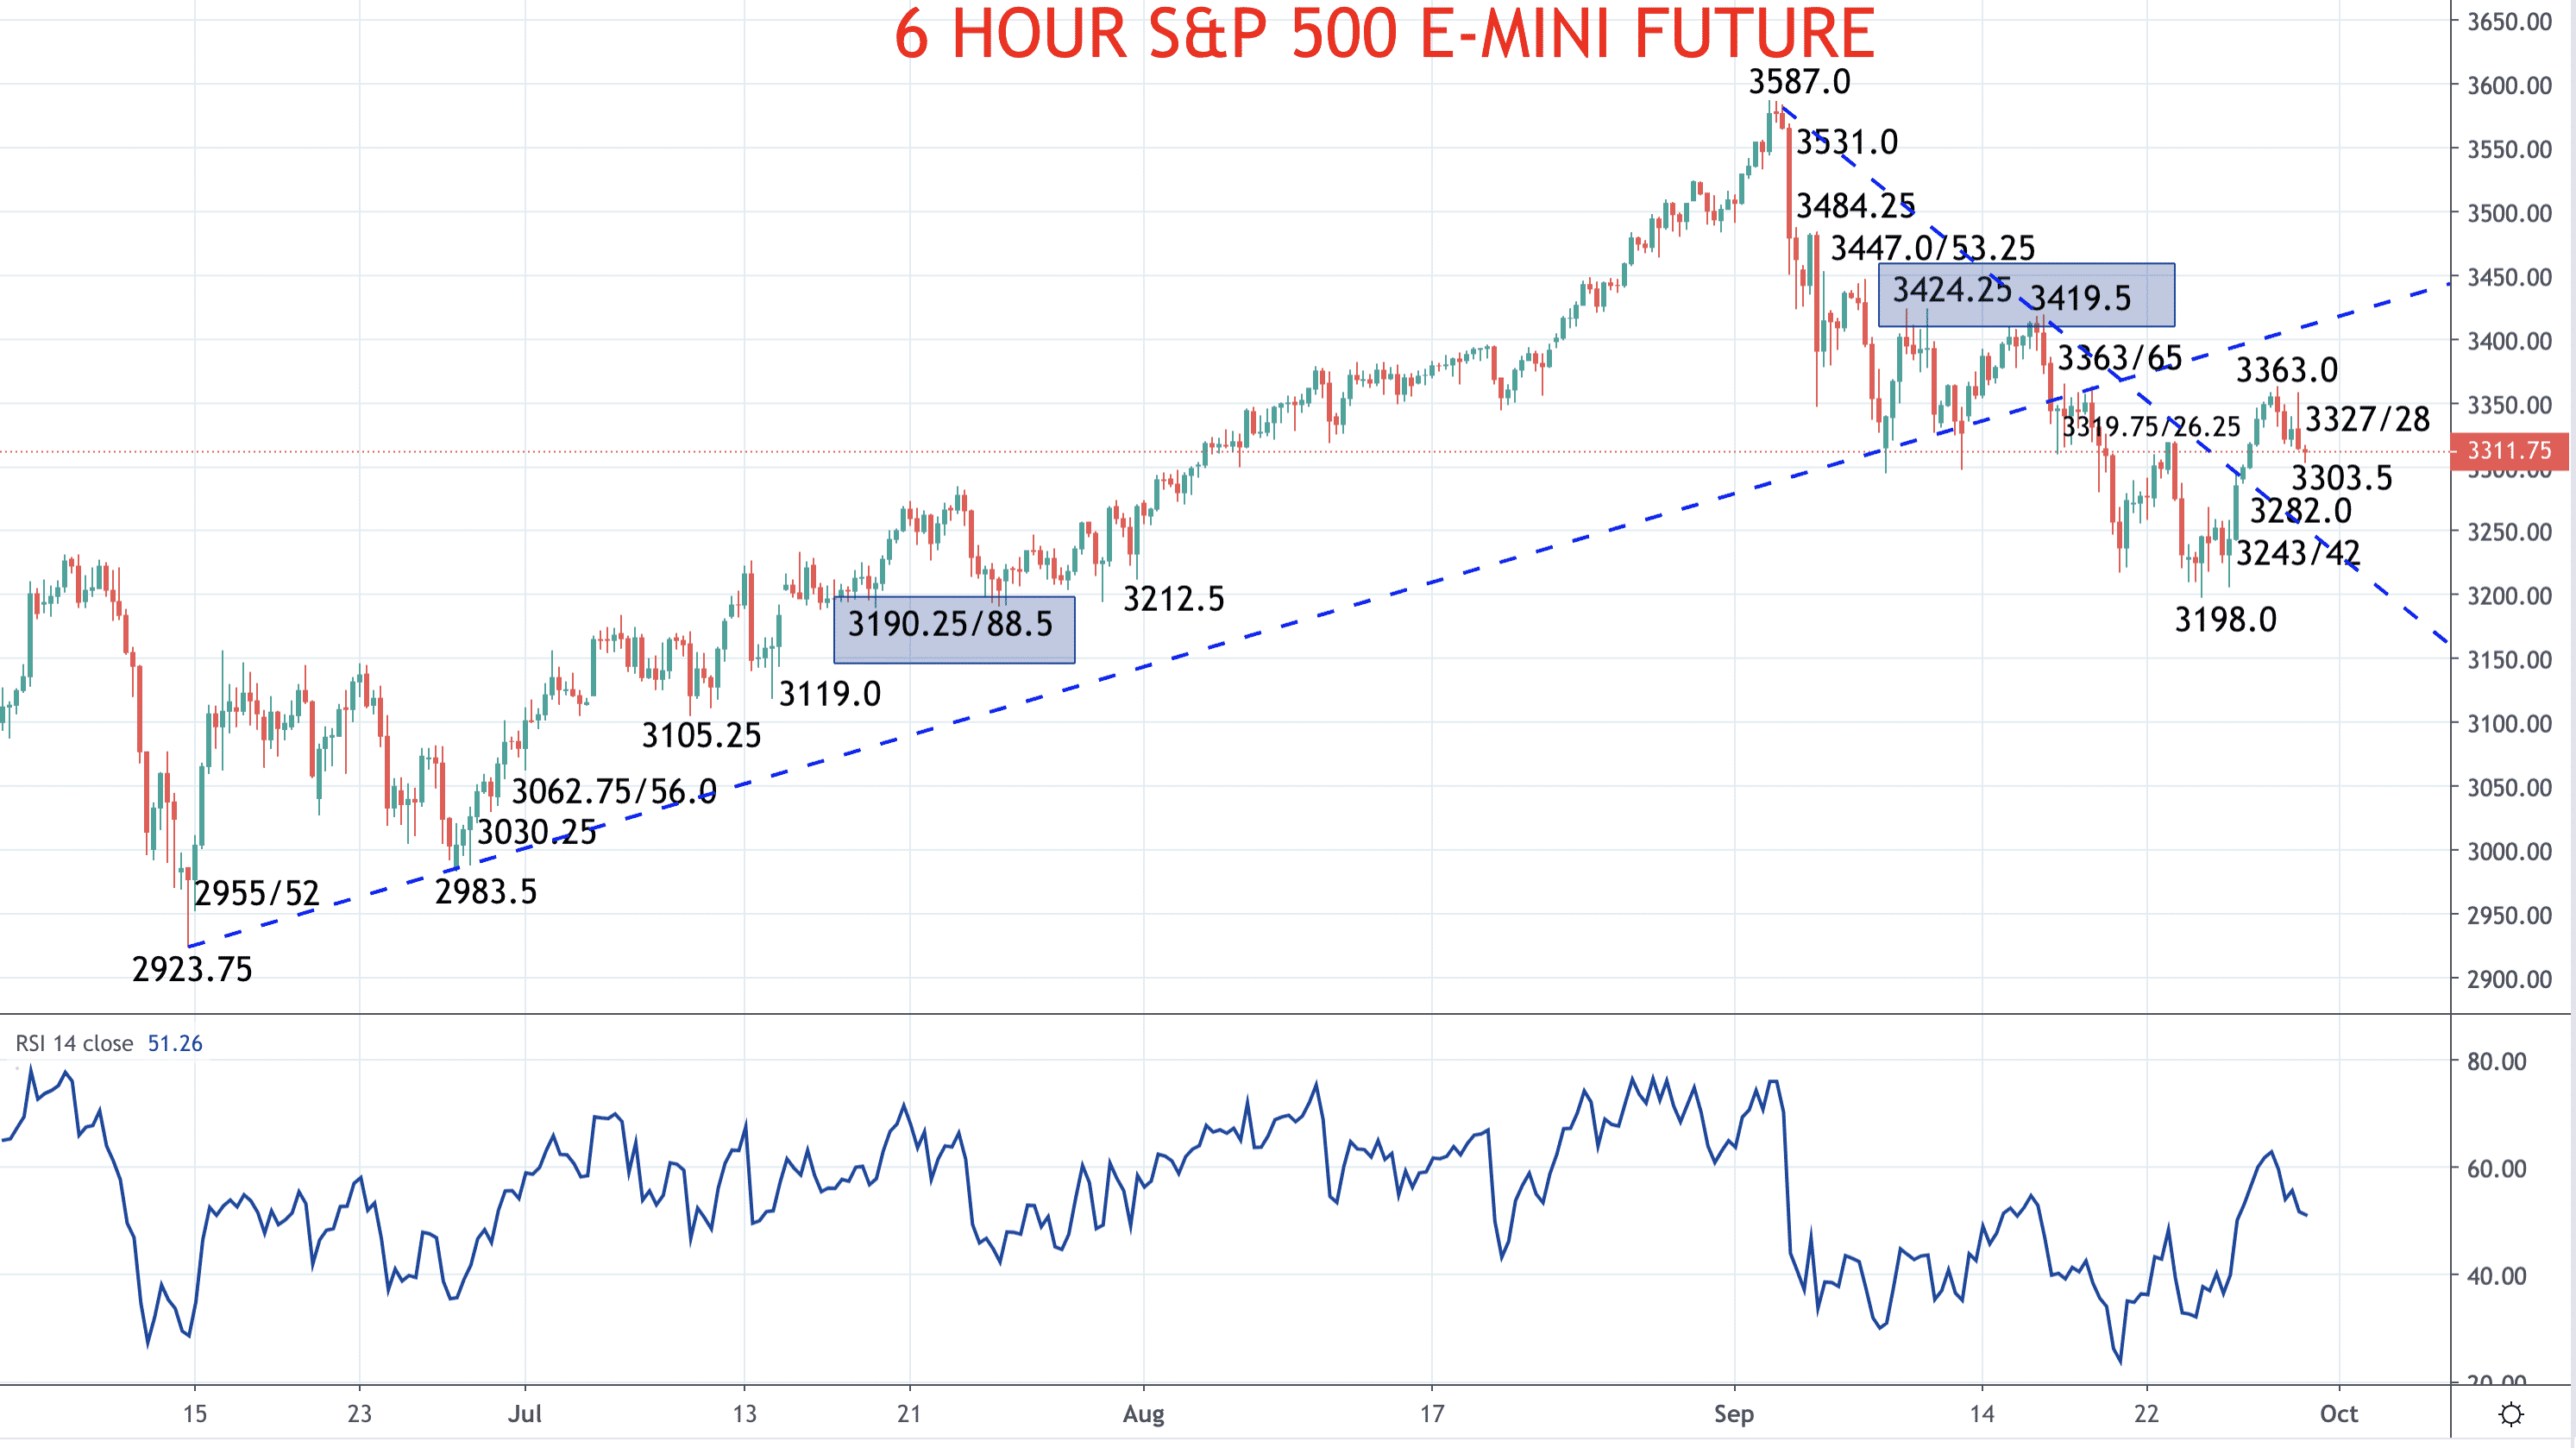 S&P 500 rebound, bigger bear threat eased, for now S&P 500 forecast